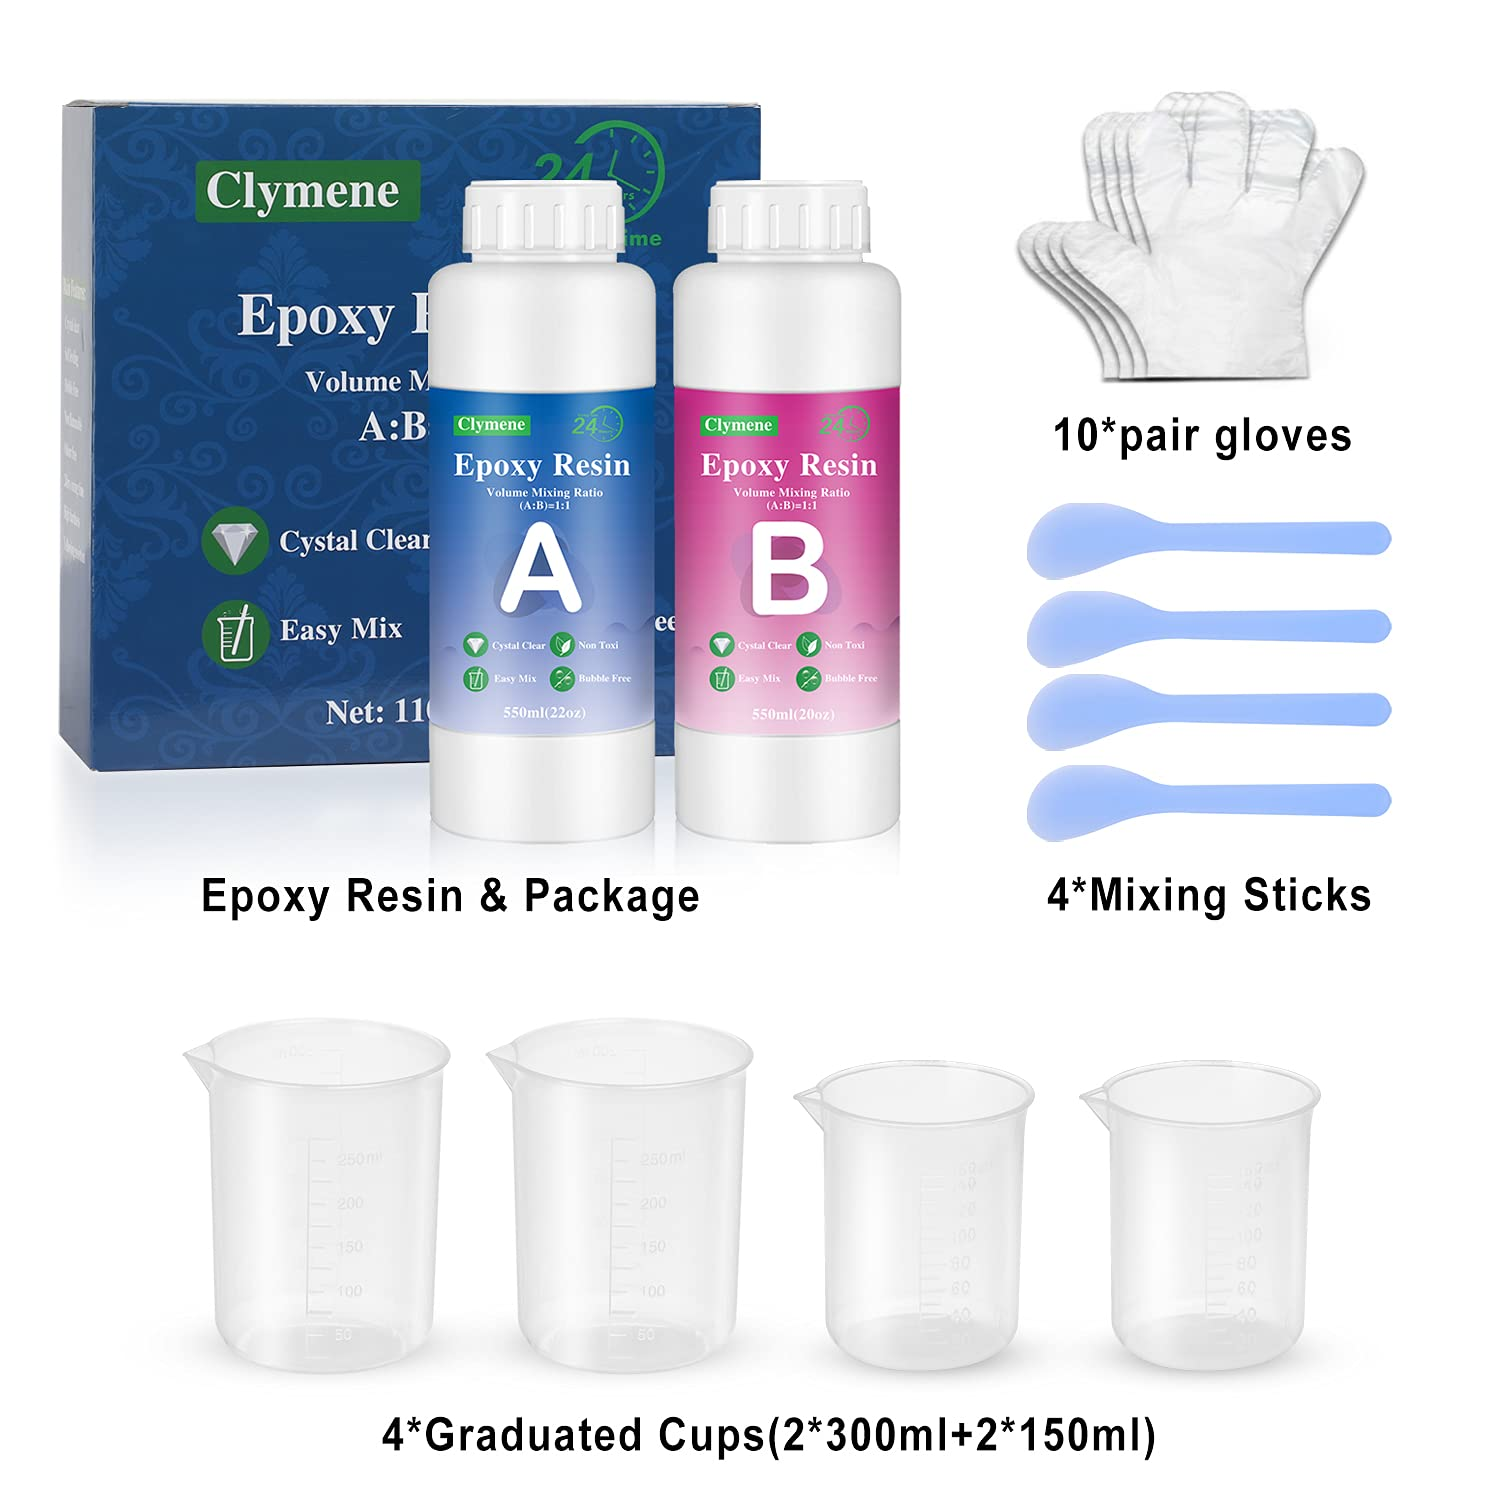  Crystal Clear Epoxy Resin